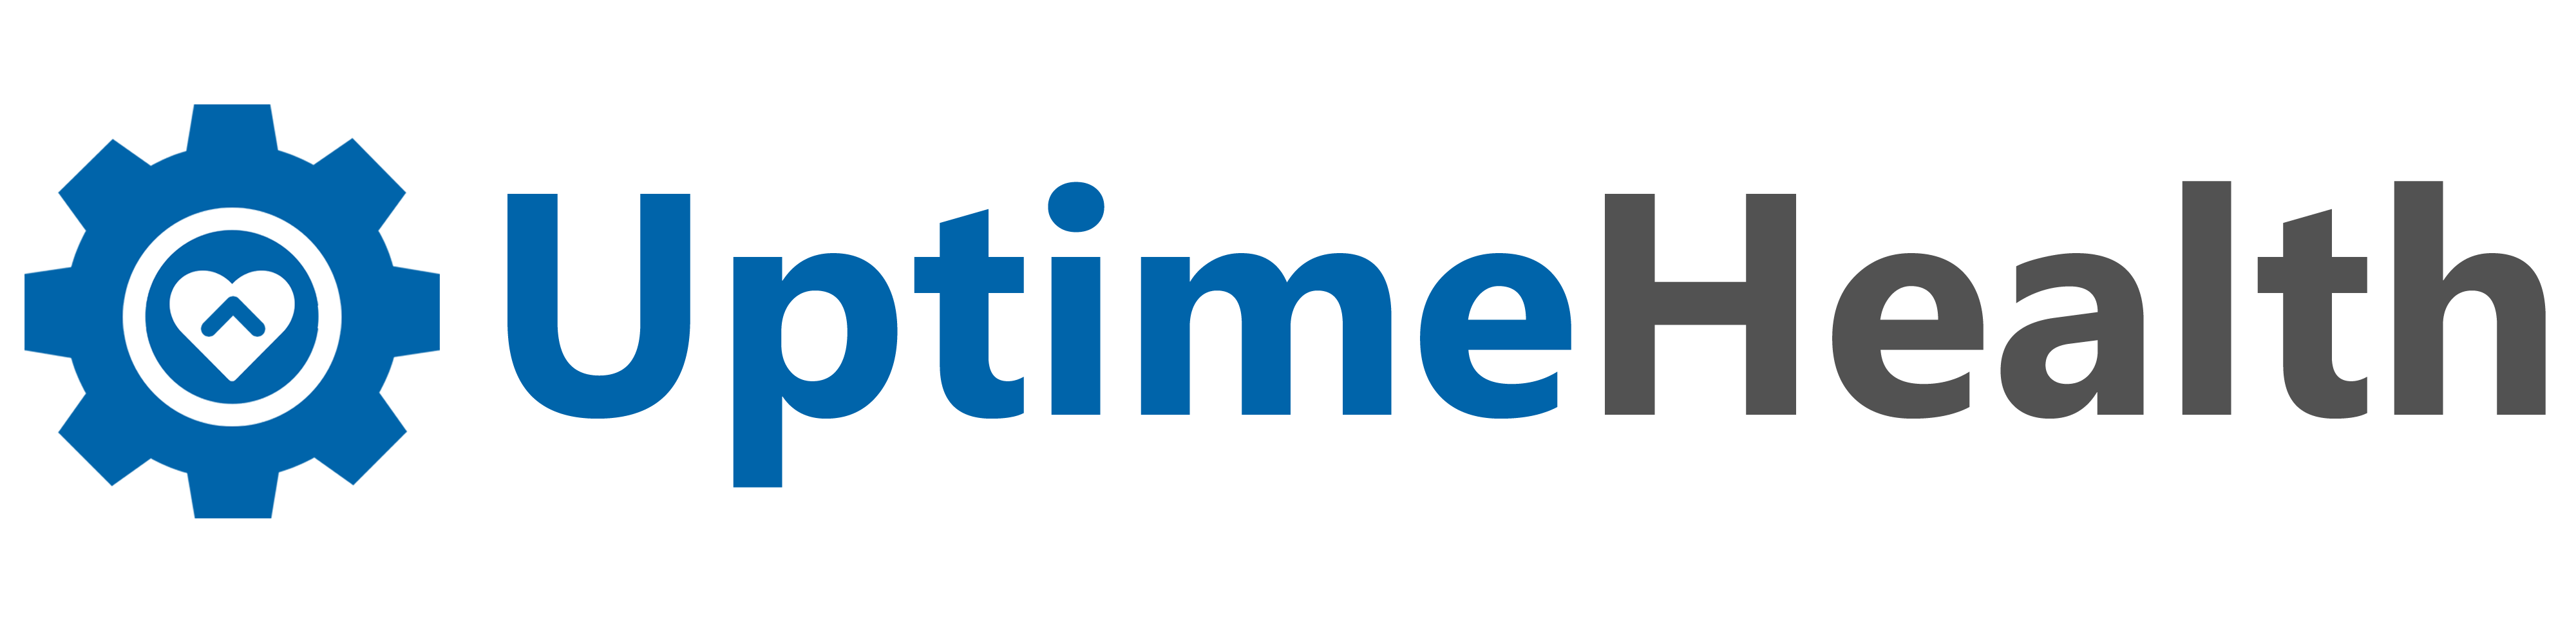 uptime health logo